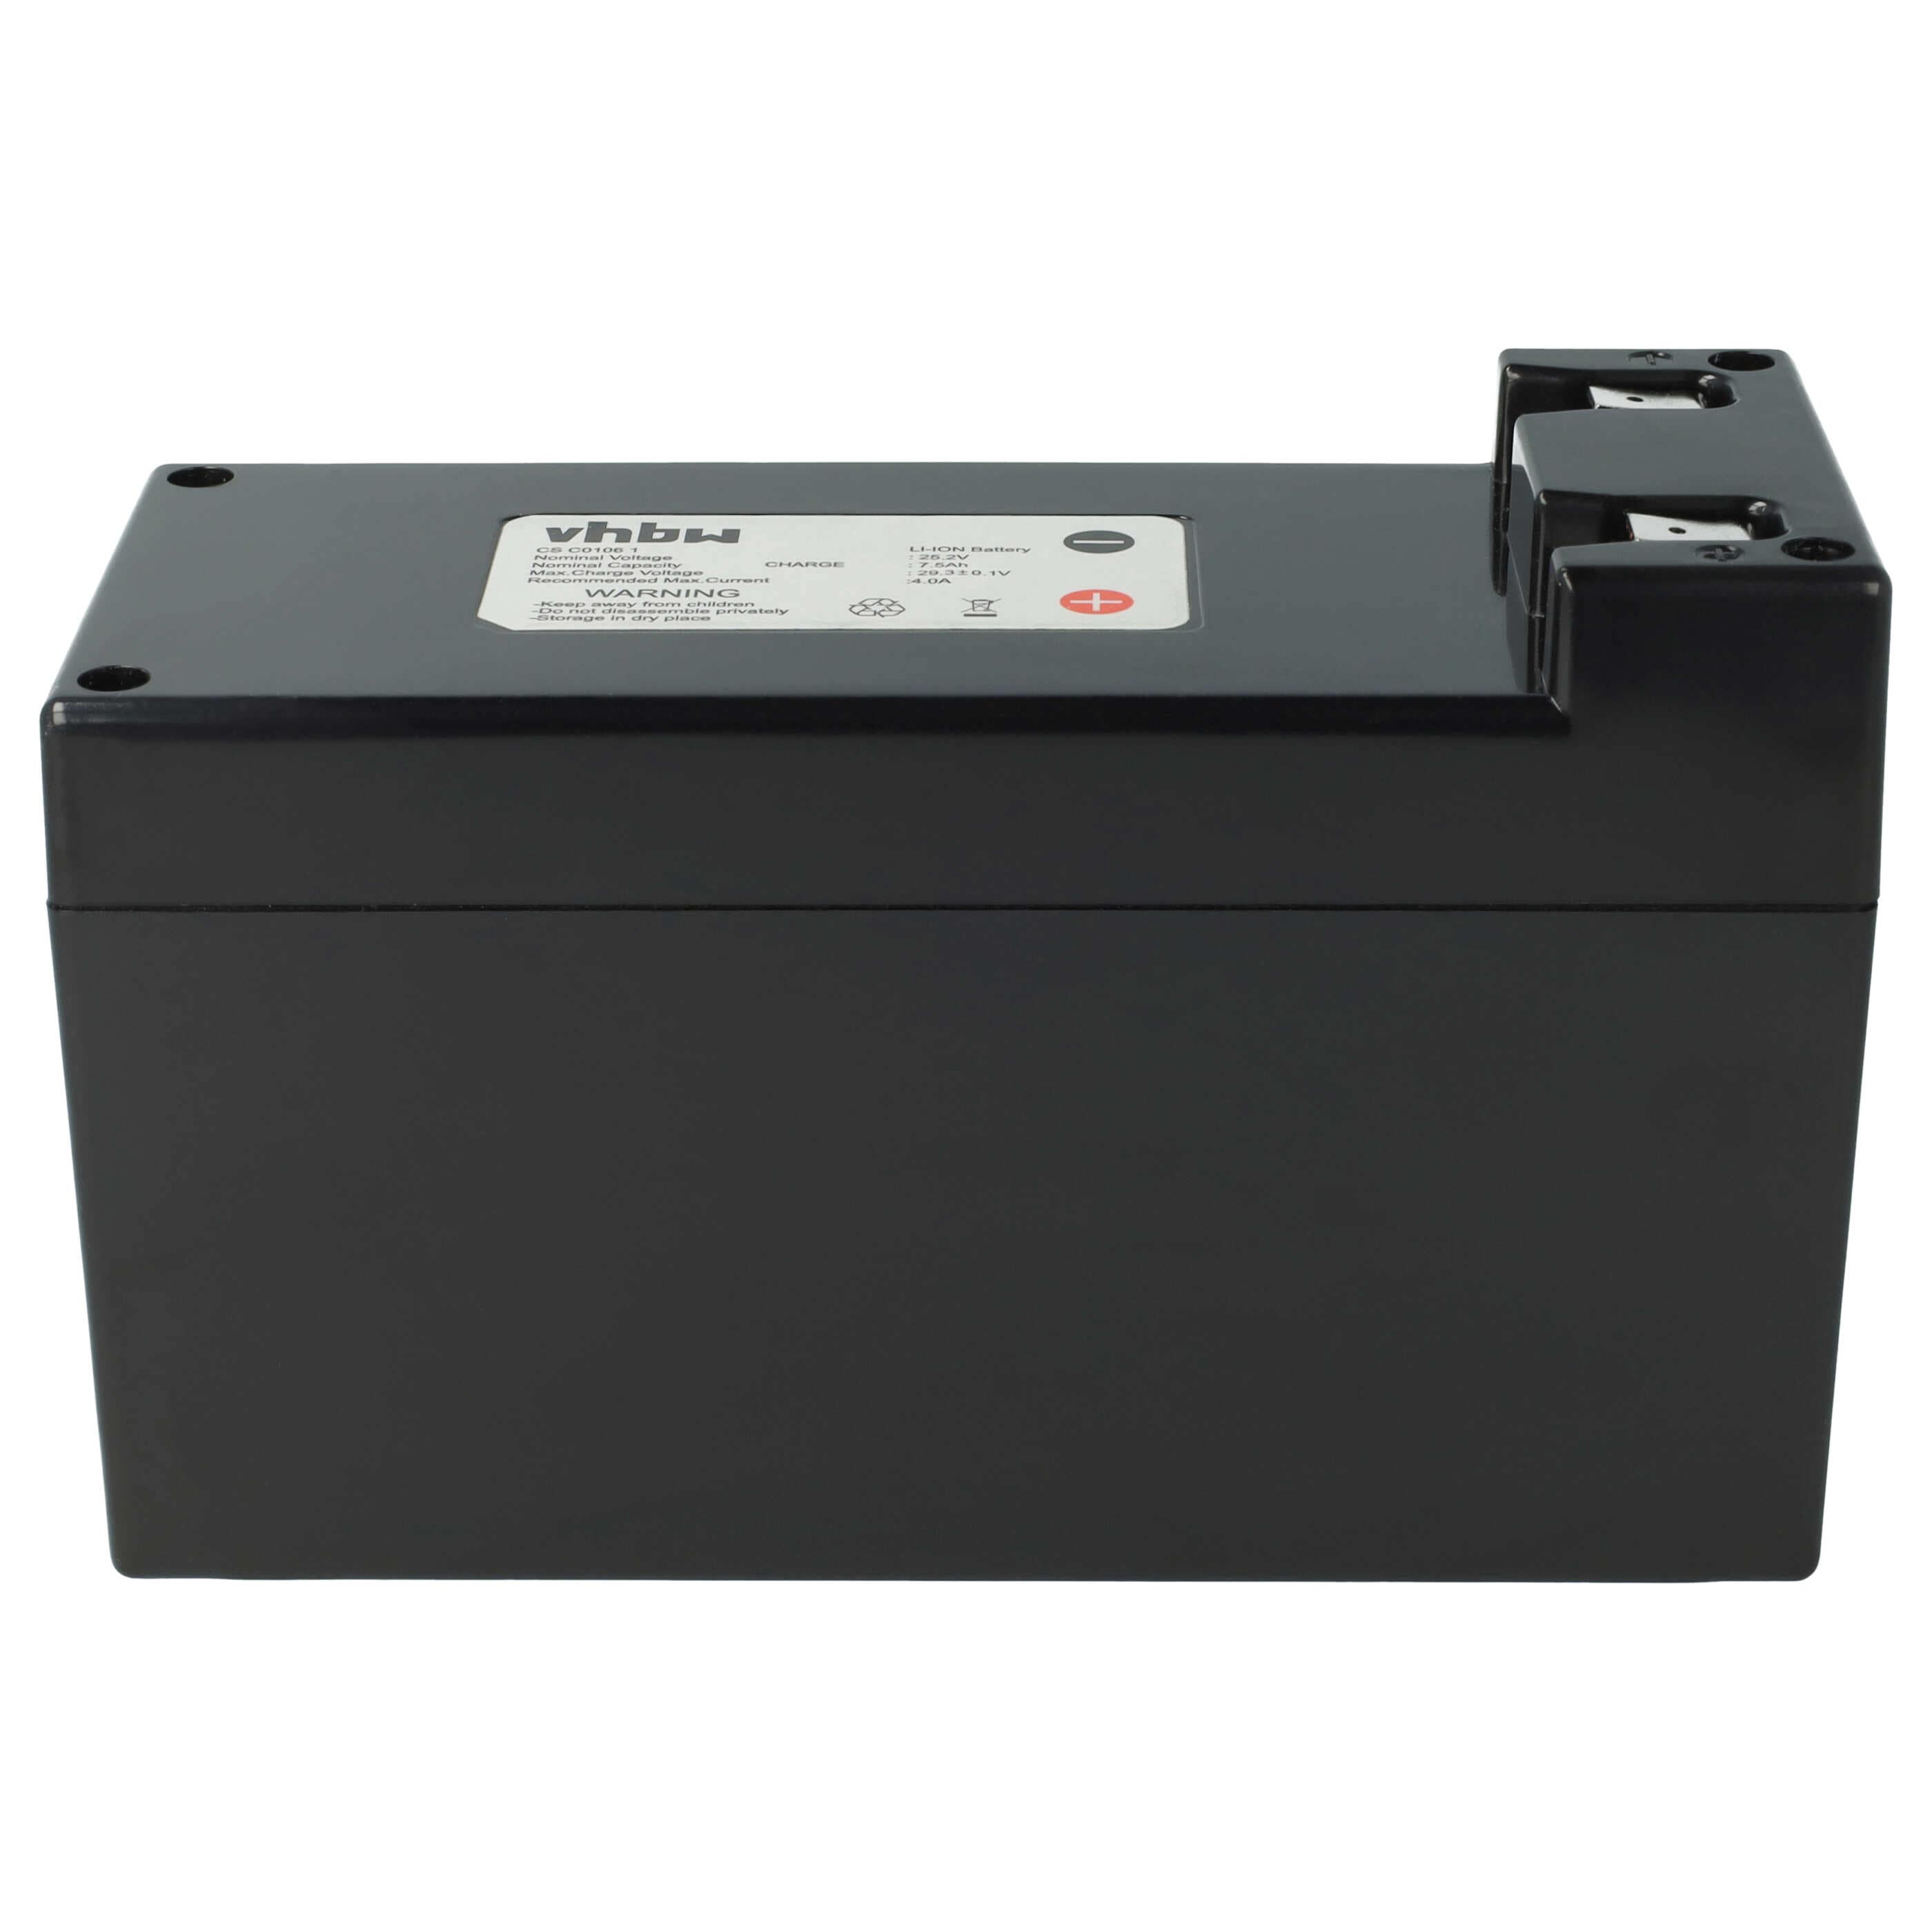 Battery Replacement for Stiga 1126-9138-01, 1126-9174-01, 1126-9105-01 - 6900mAh 25.2V Li-ion